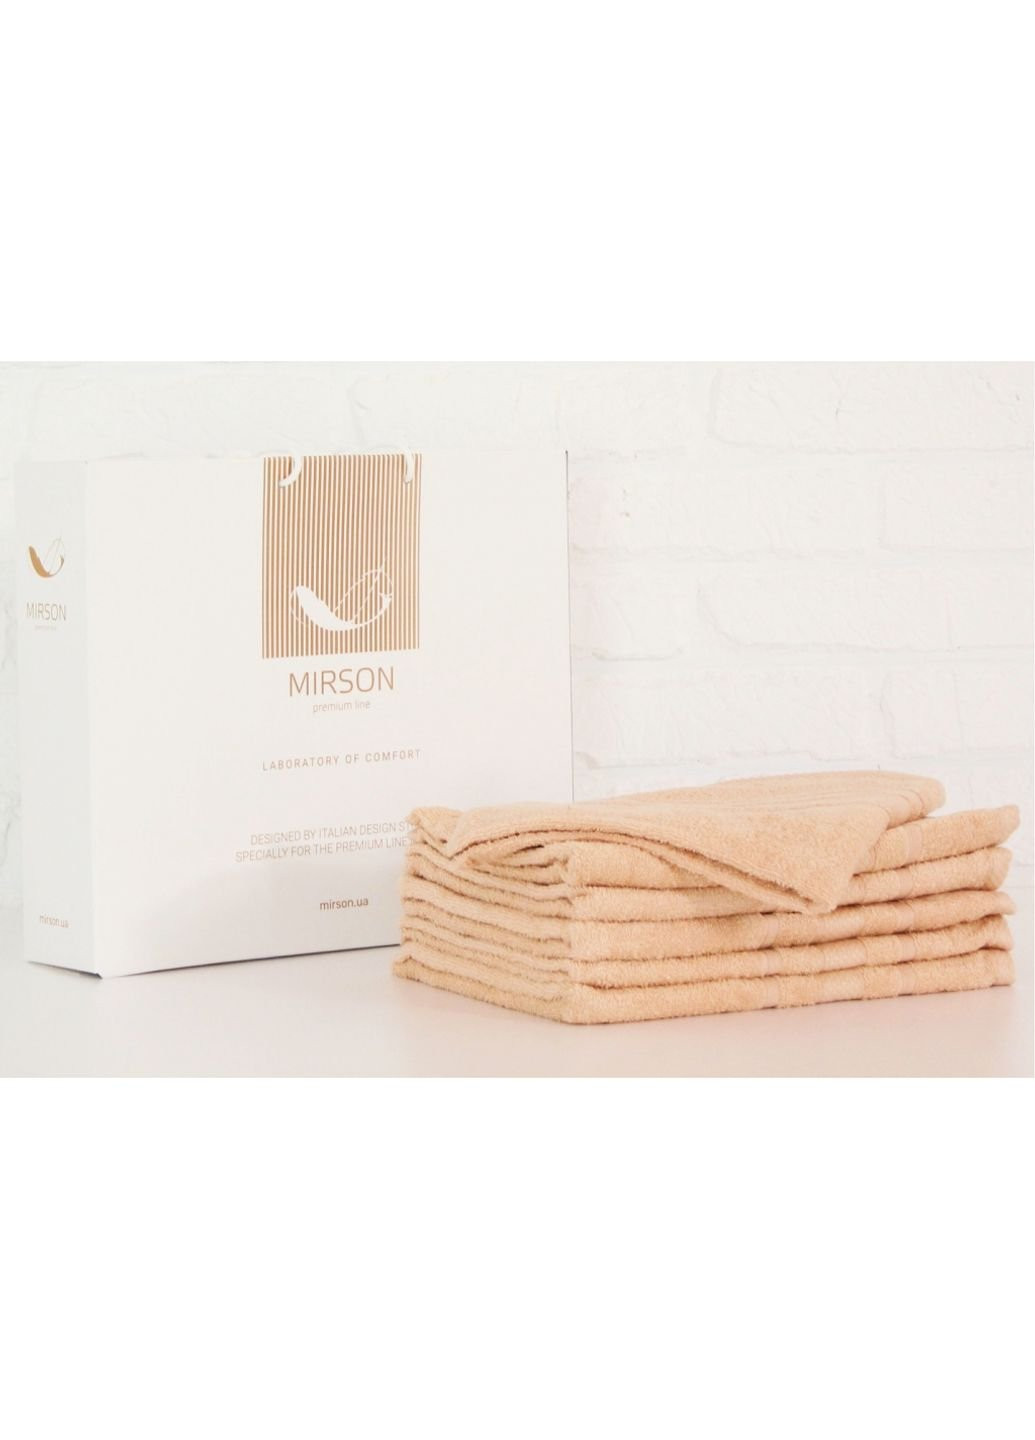 Mirson полотенце набор банных №5075 elite softness ivory 70х140 6 шт (2200003524154) молочный производство - Украина